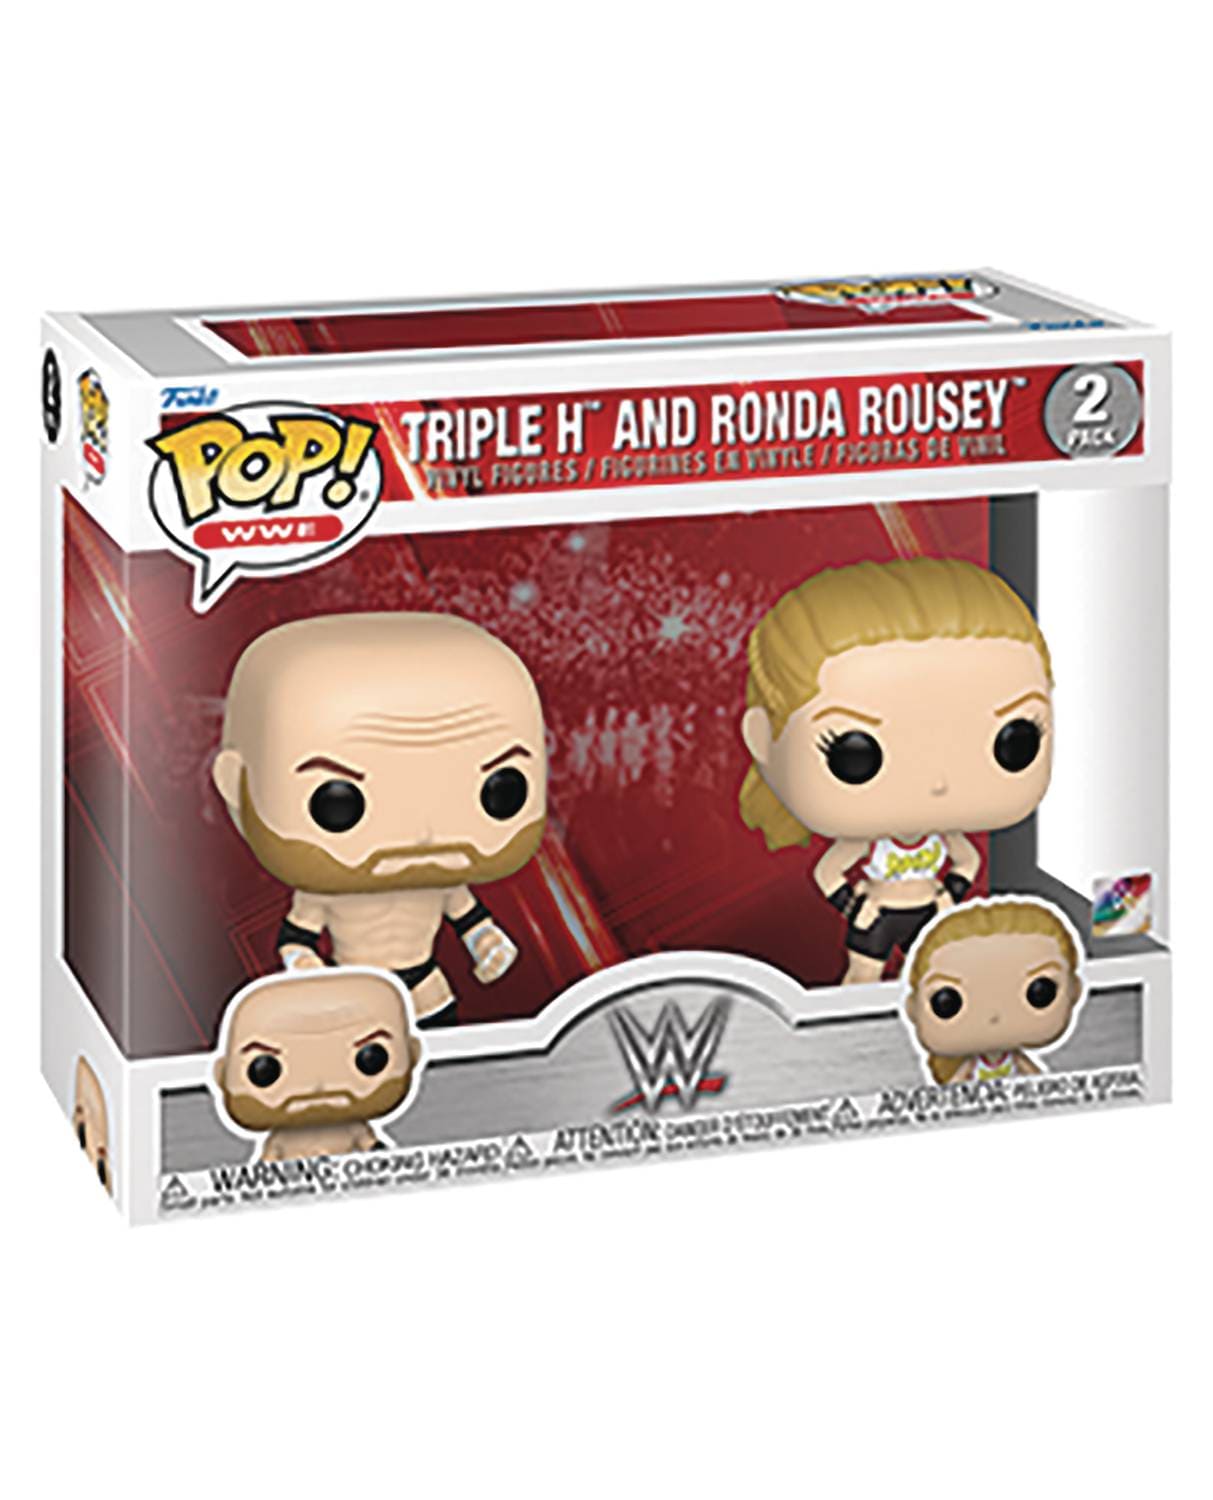 Funko Pop!: WWE - Triple H and Ronda Rousey